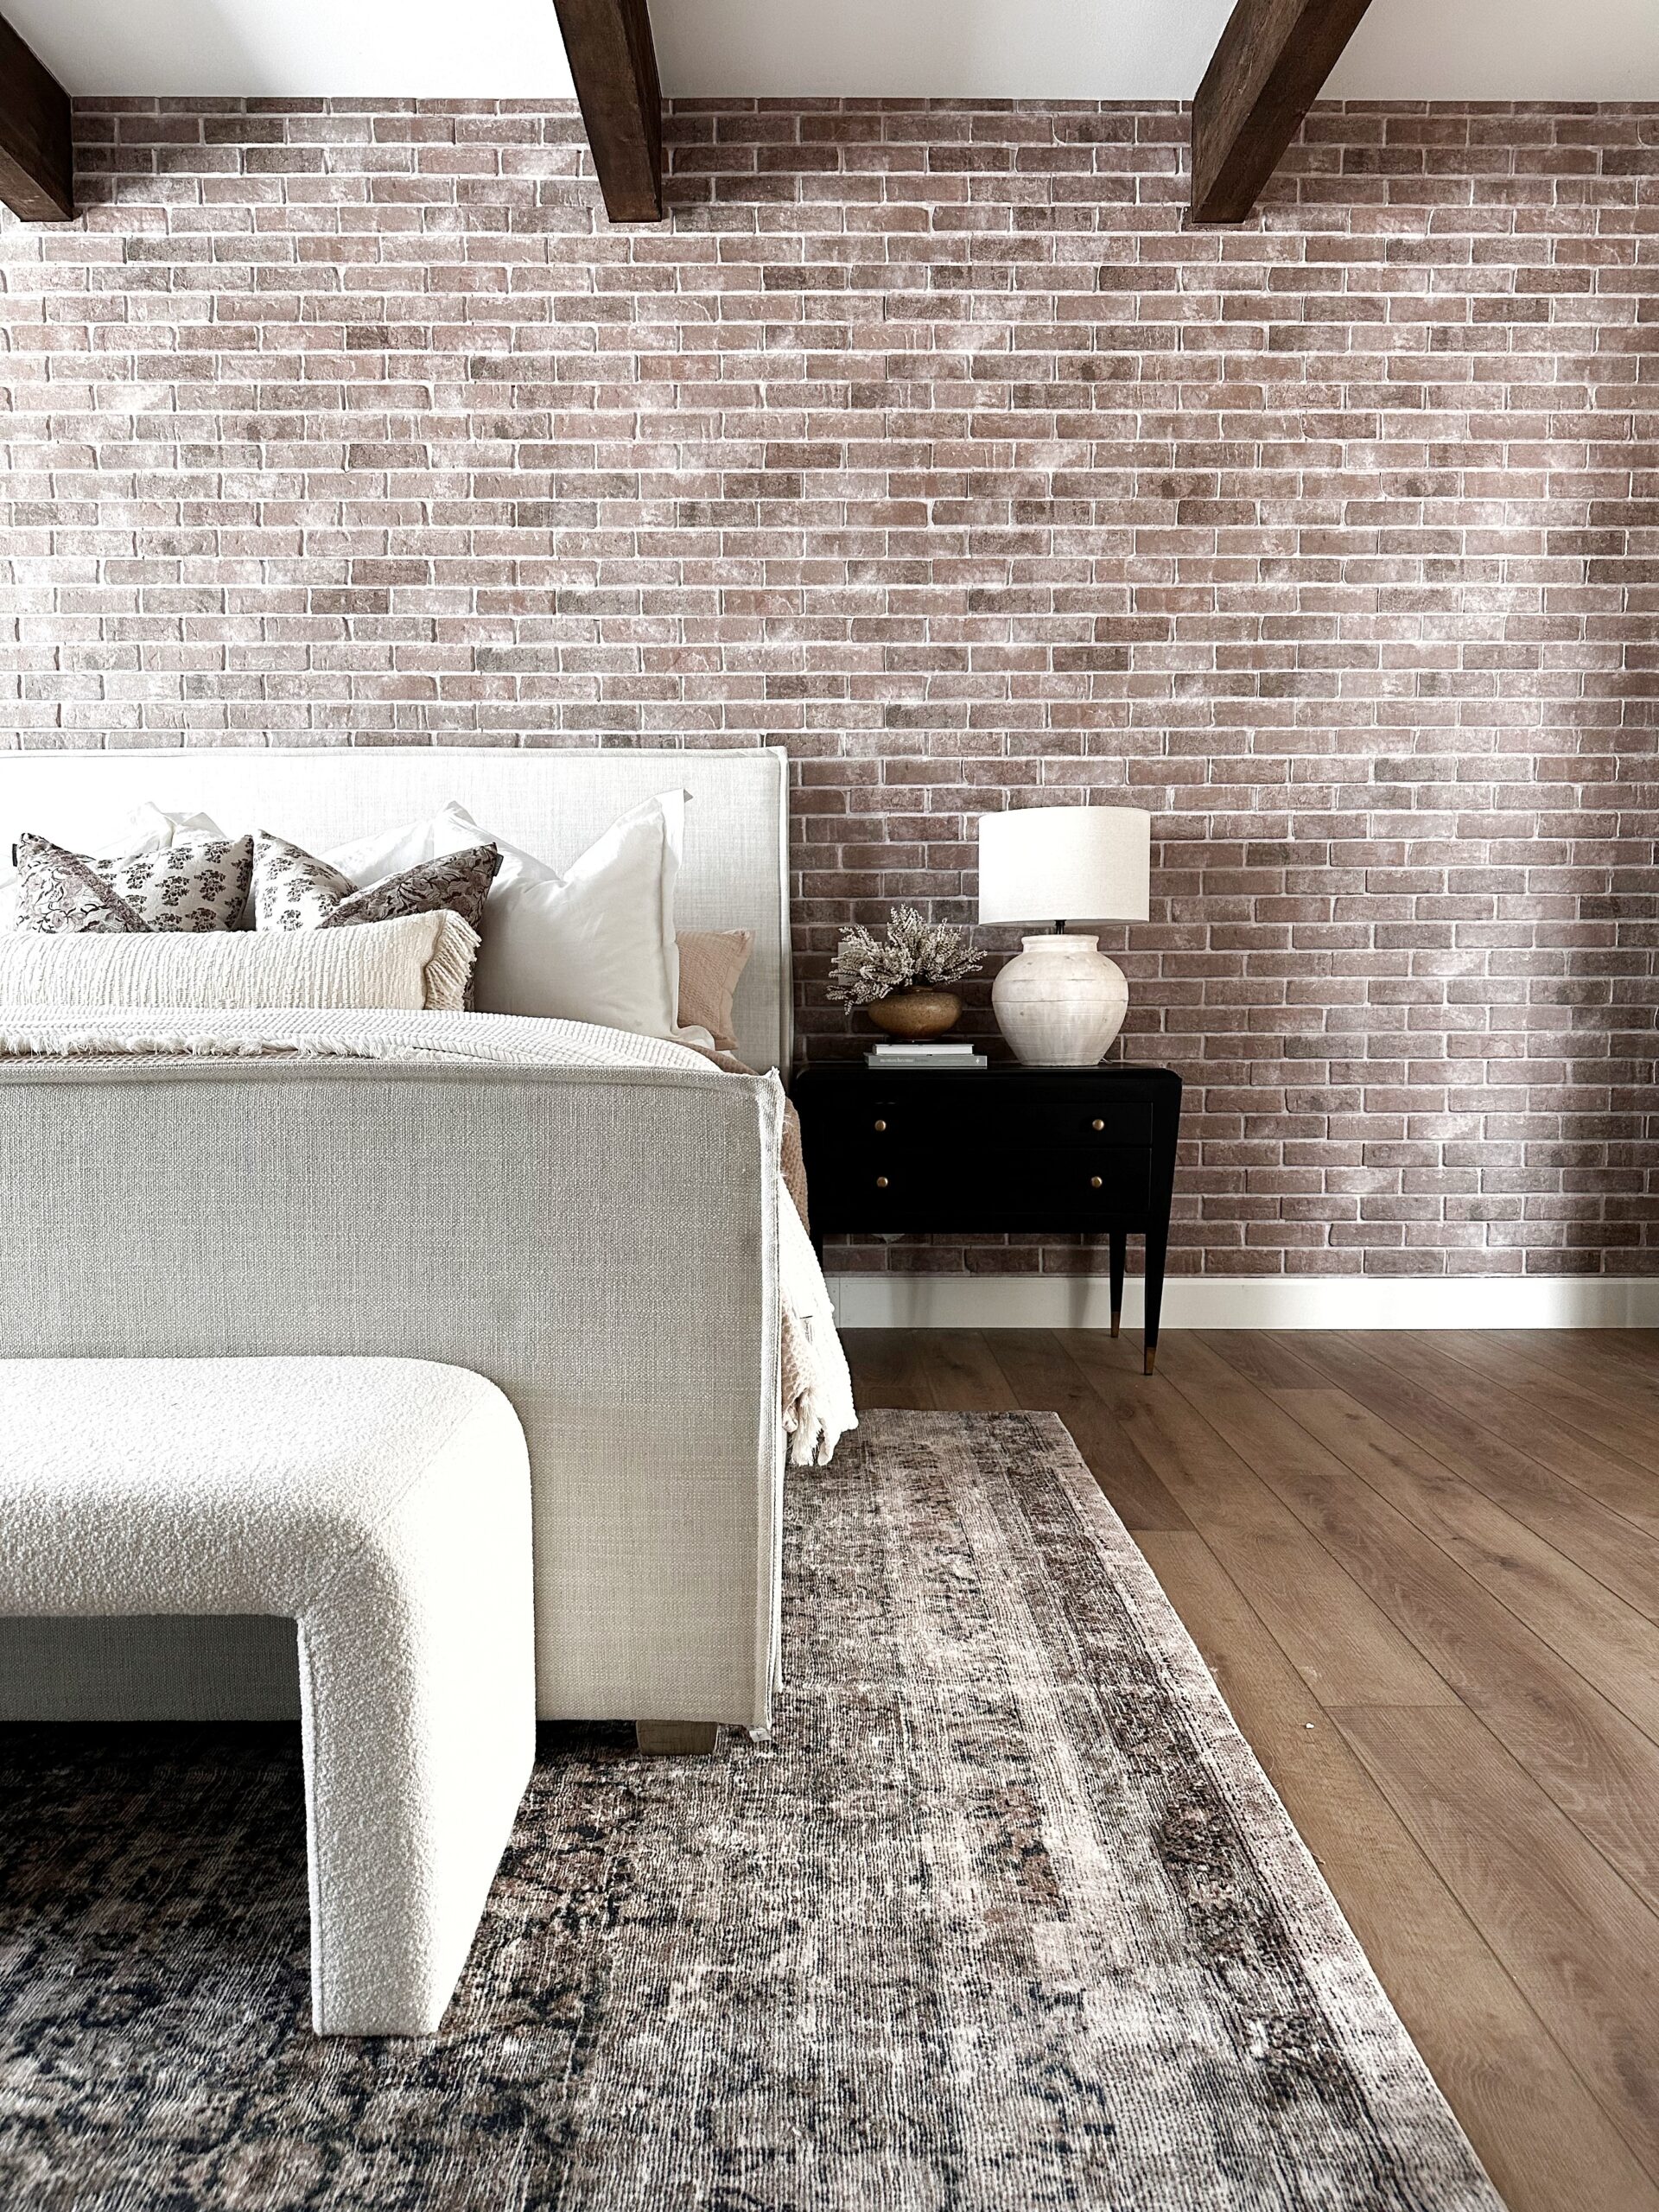 exposed brick wall, bedding, side table, modern bedroom, throw pillows, euro pillows, area rug, master bedroom, home decor, home design 